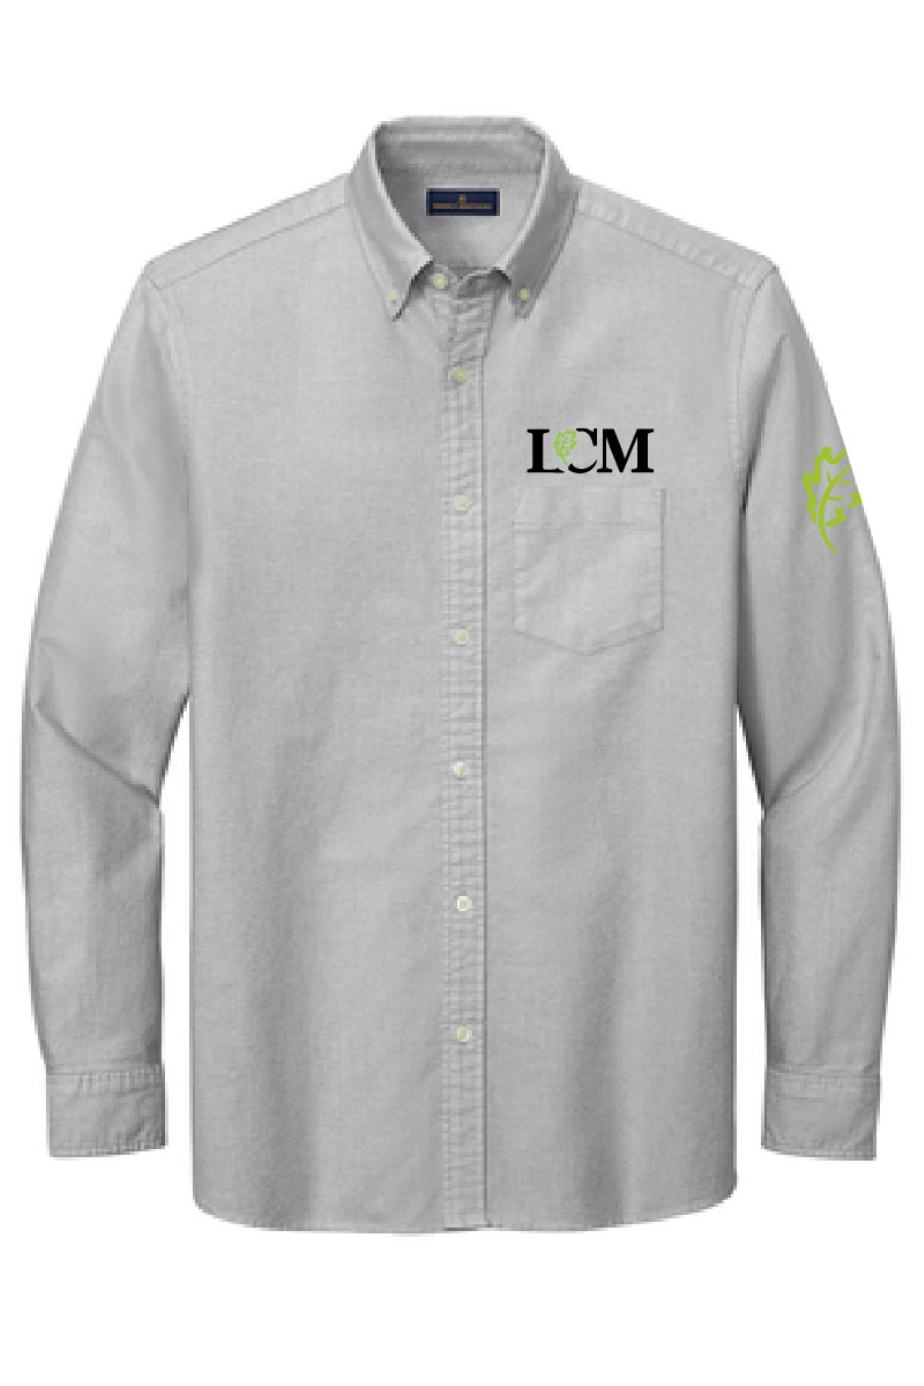 LCM - Mens Brooks Brothers® Casual Oxford Cloth Shirt - BB18004